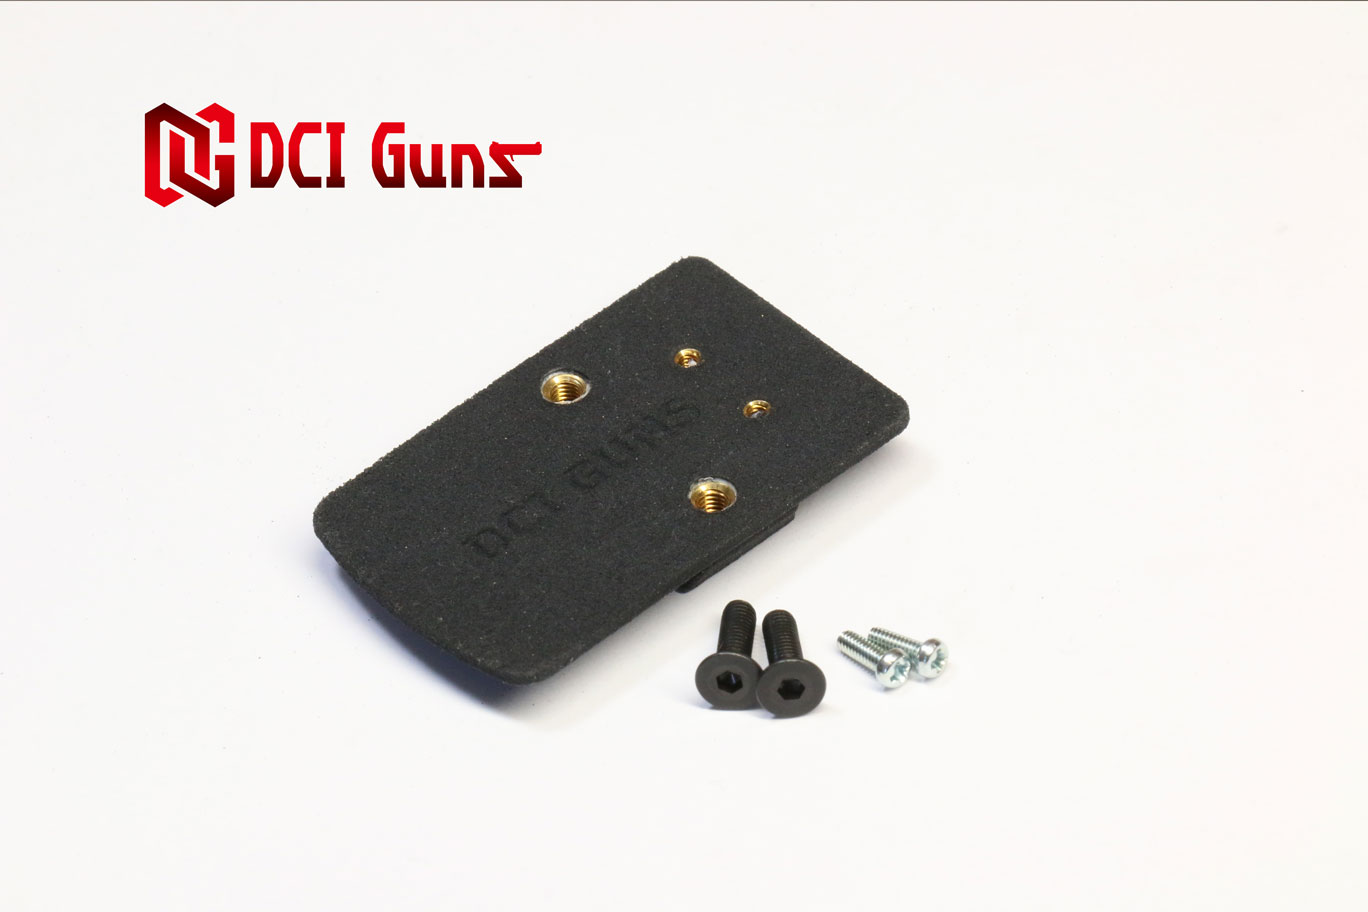 DCI Guns 東京マルイ HK45/HK45T GBB用RMRマウントV2.0 エアガン エアーガン ガスガン ブローバック カスタムパーツ ダットサイト ドットサイト 光学機器 スライド 直付け サバゲー サバイバルゲーム